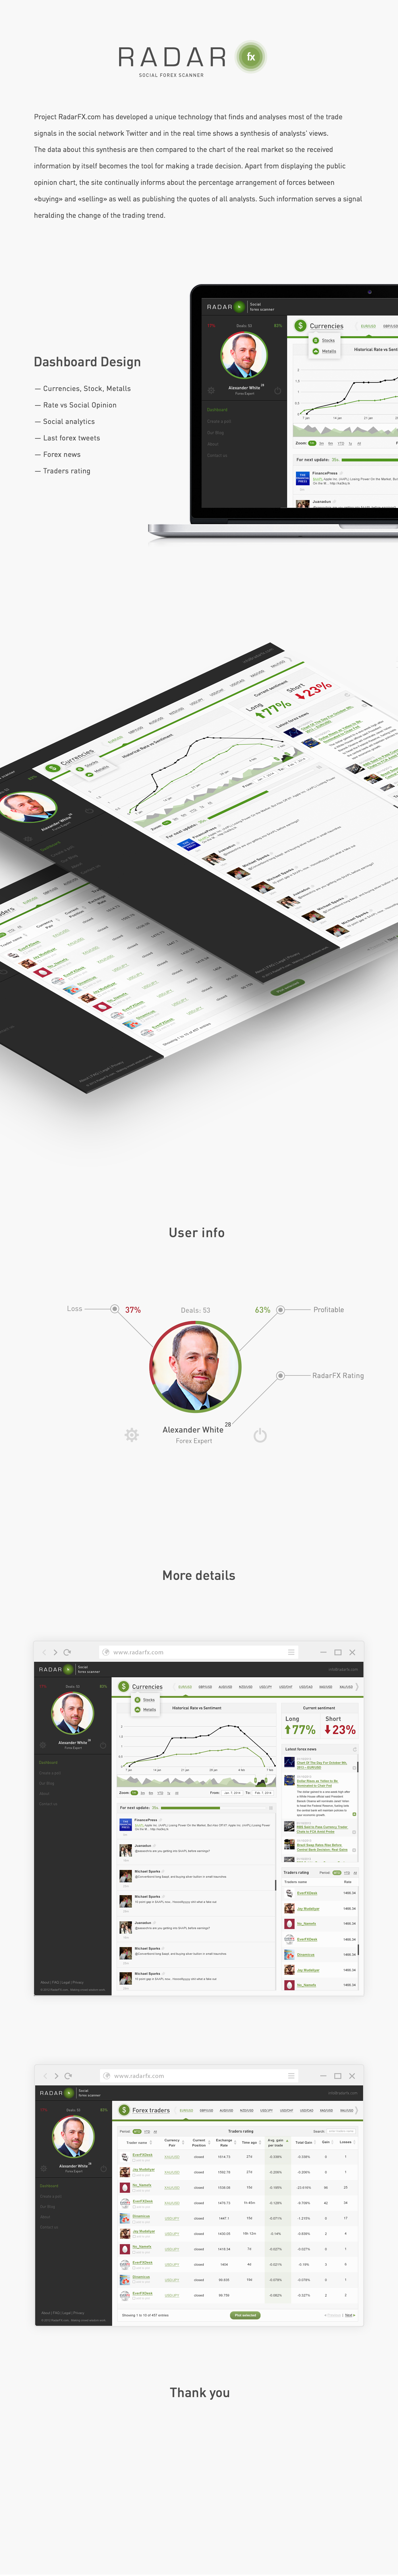 dashboard ux Charts clean Interface Forex money trading UI social Adaptive Web euro